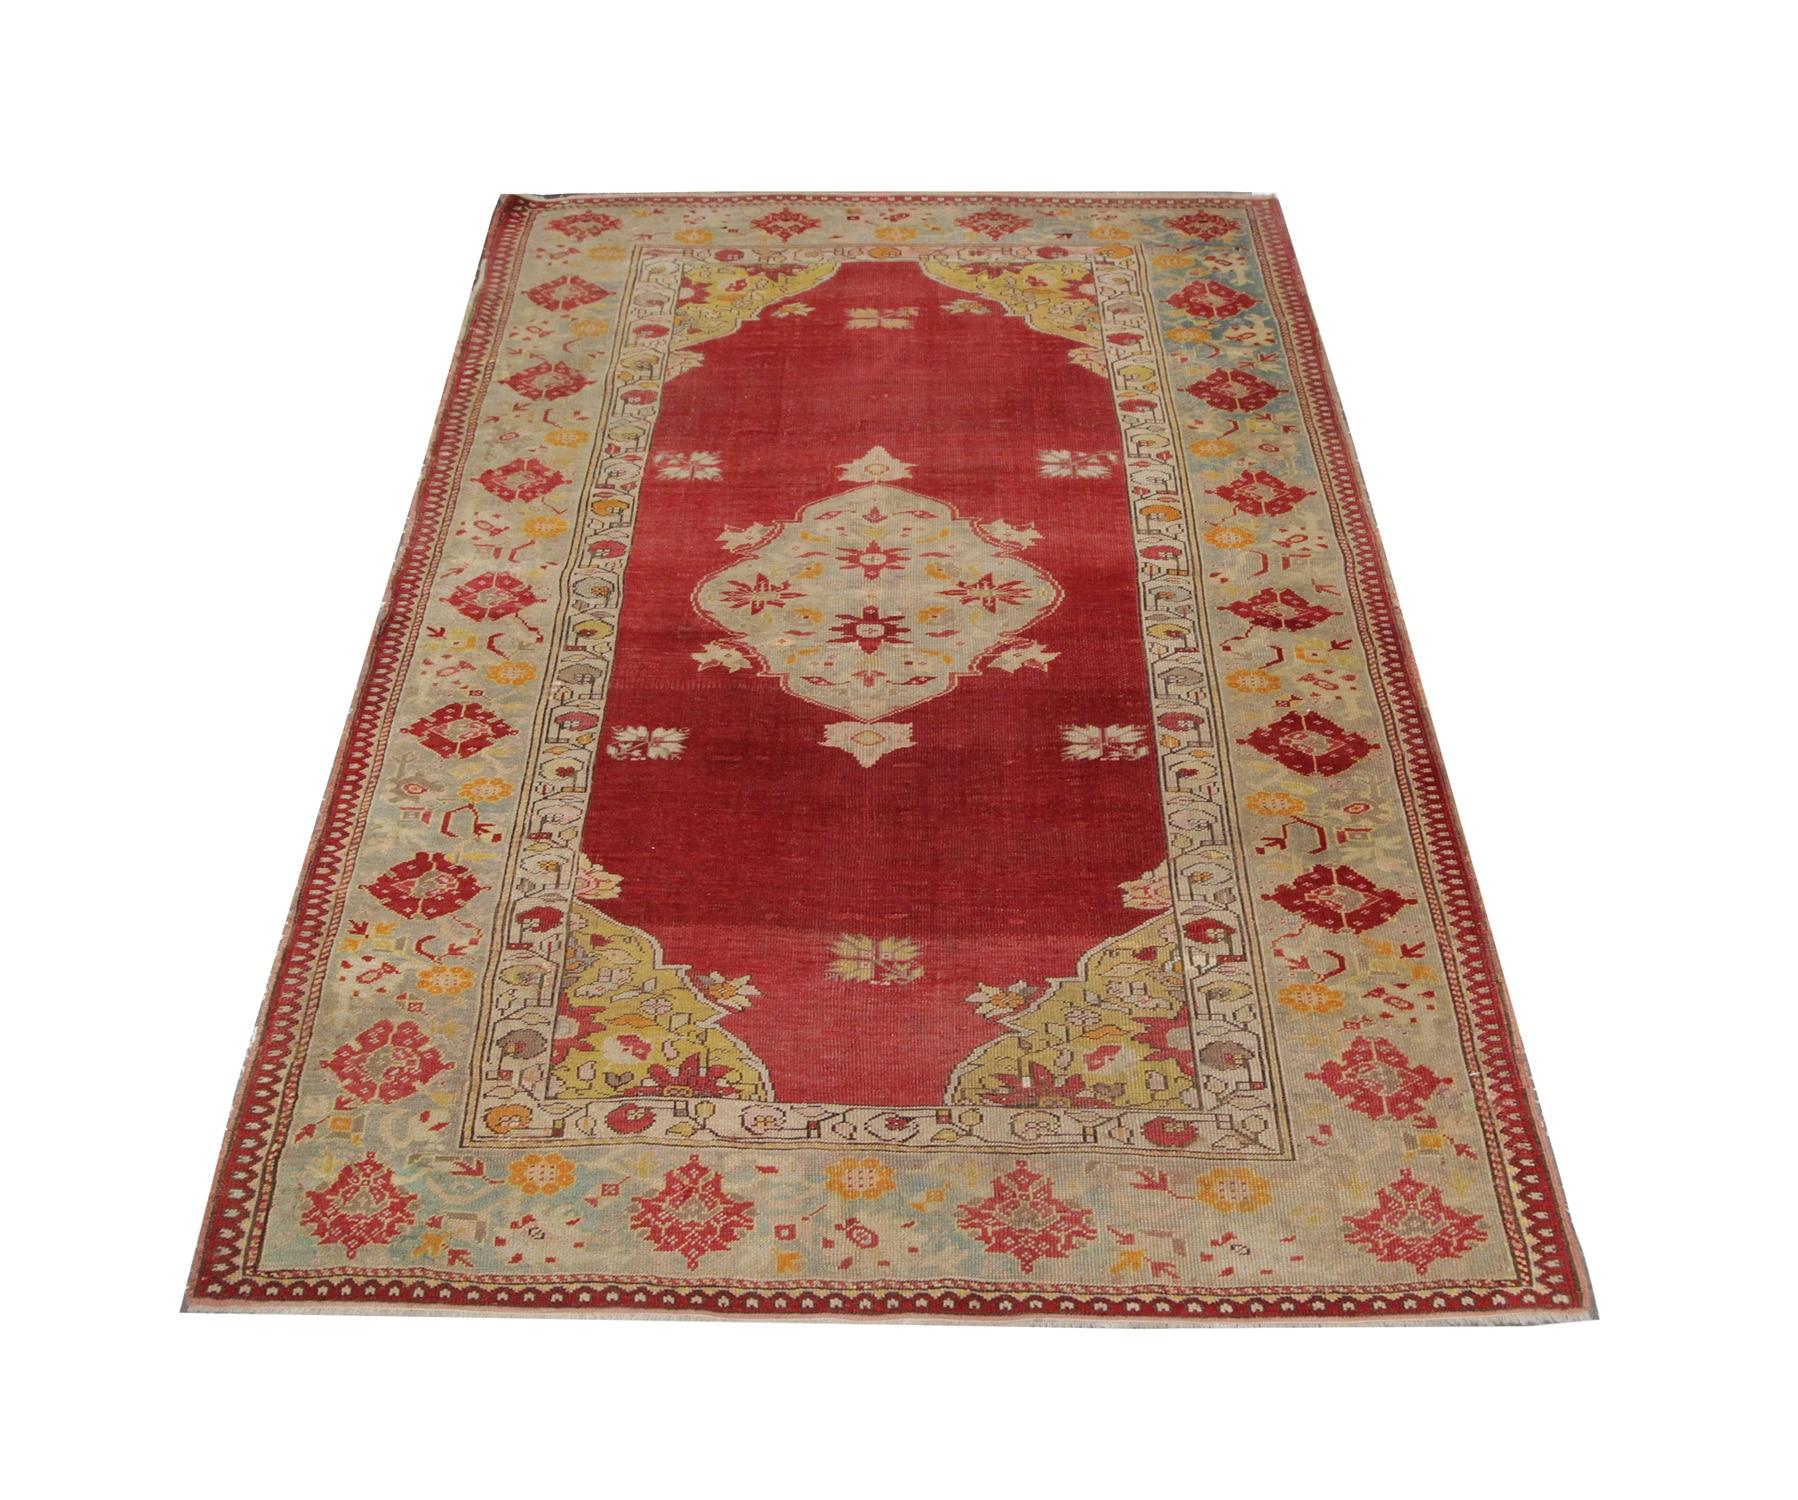 19th Century Antique Rug, Handmade Carpet Oriental Turkish Rug Red Wool Living Room Rugs For Sale